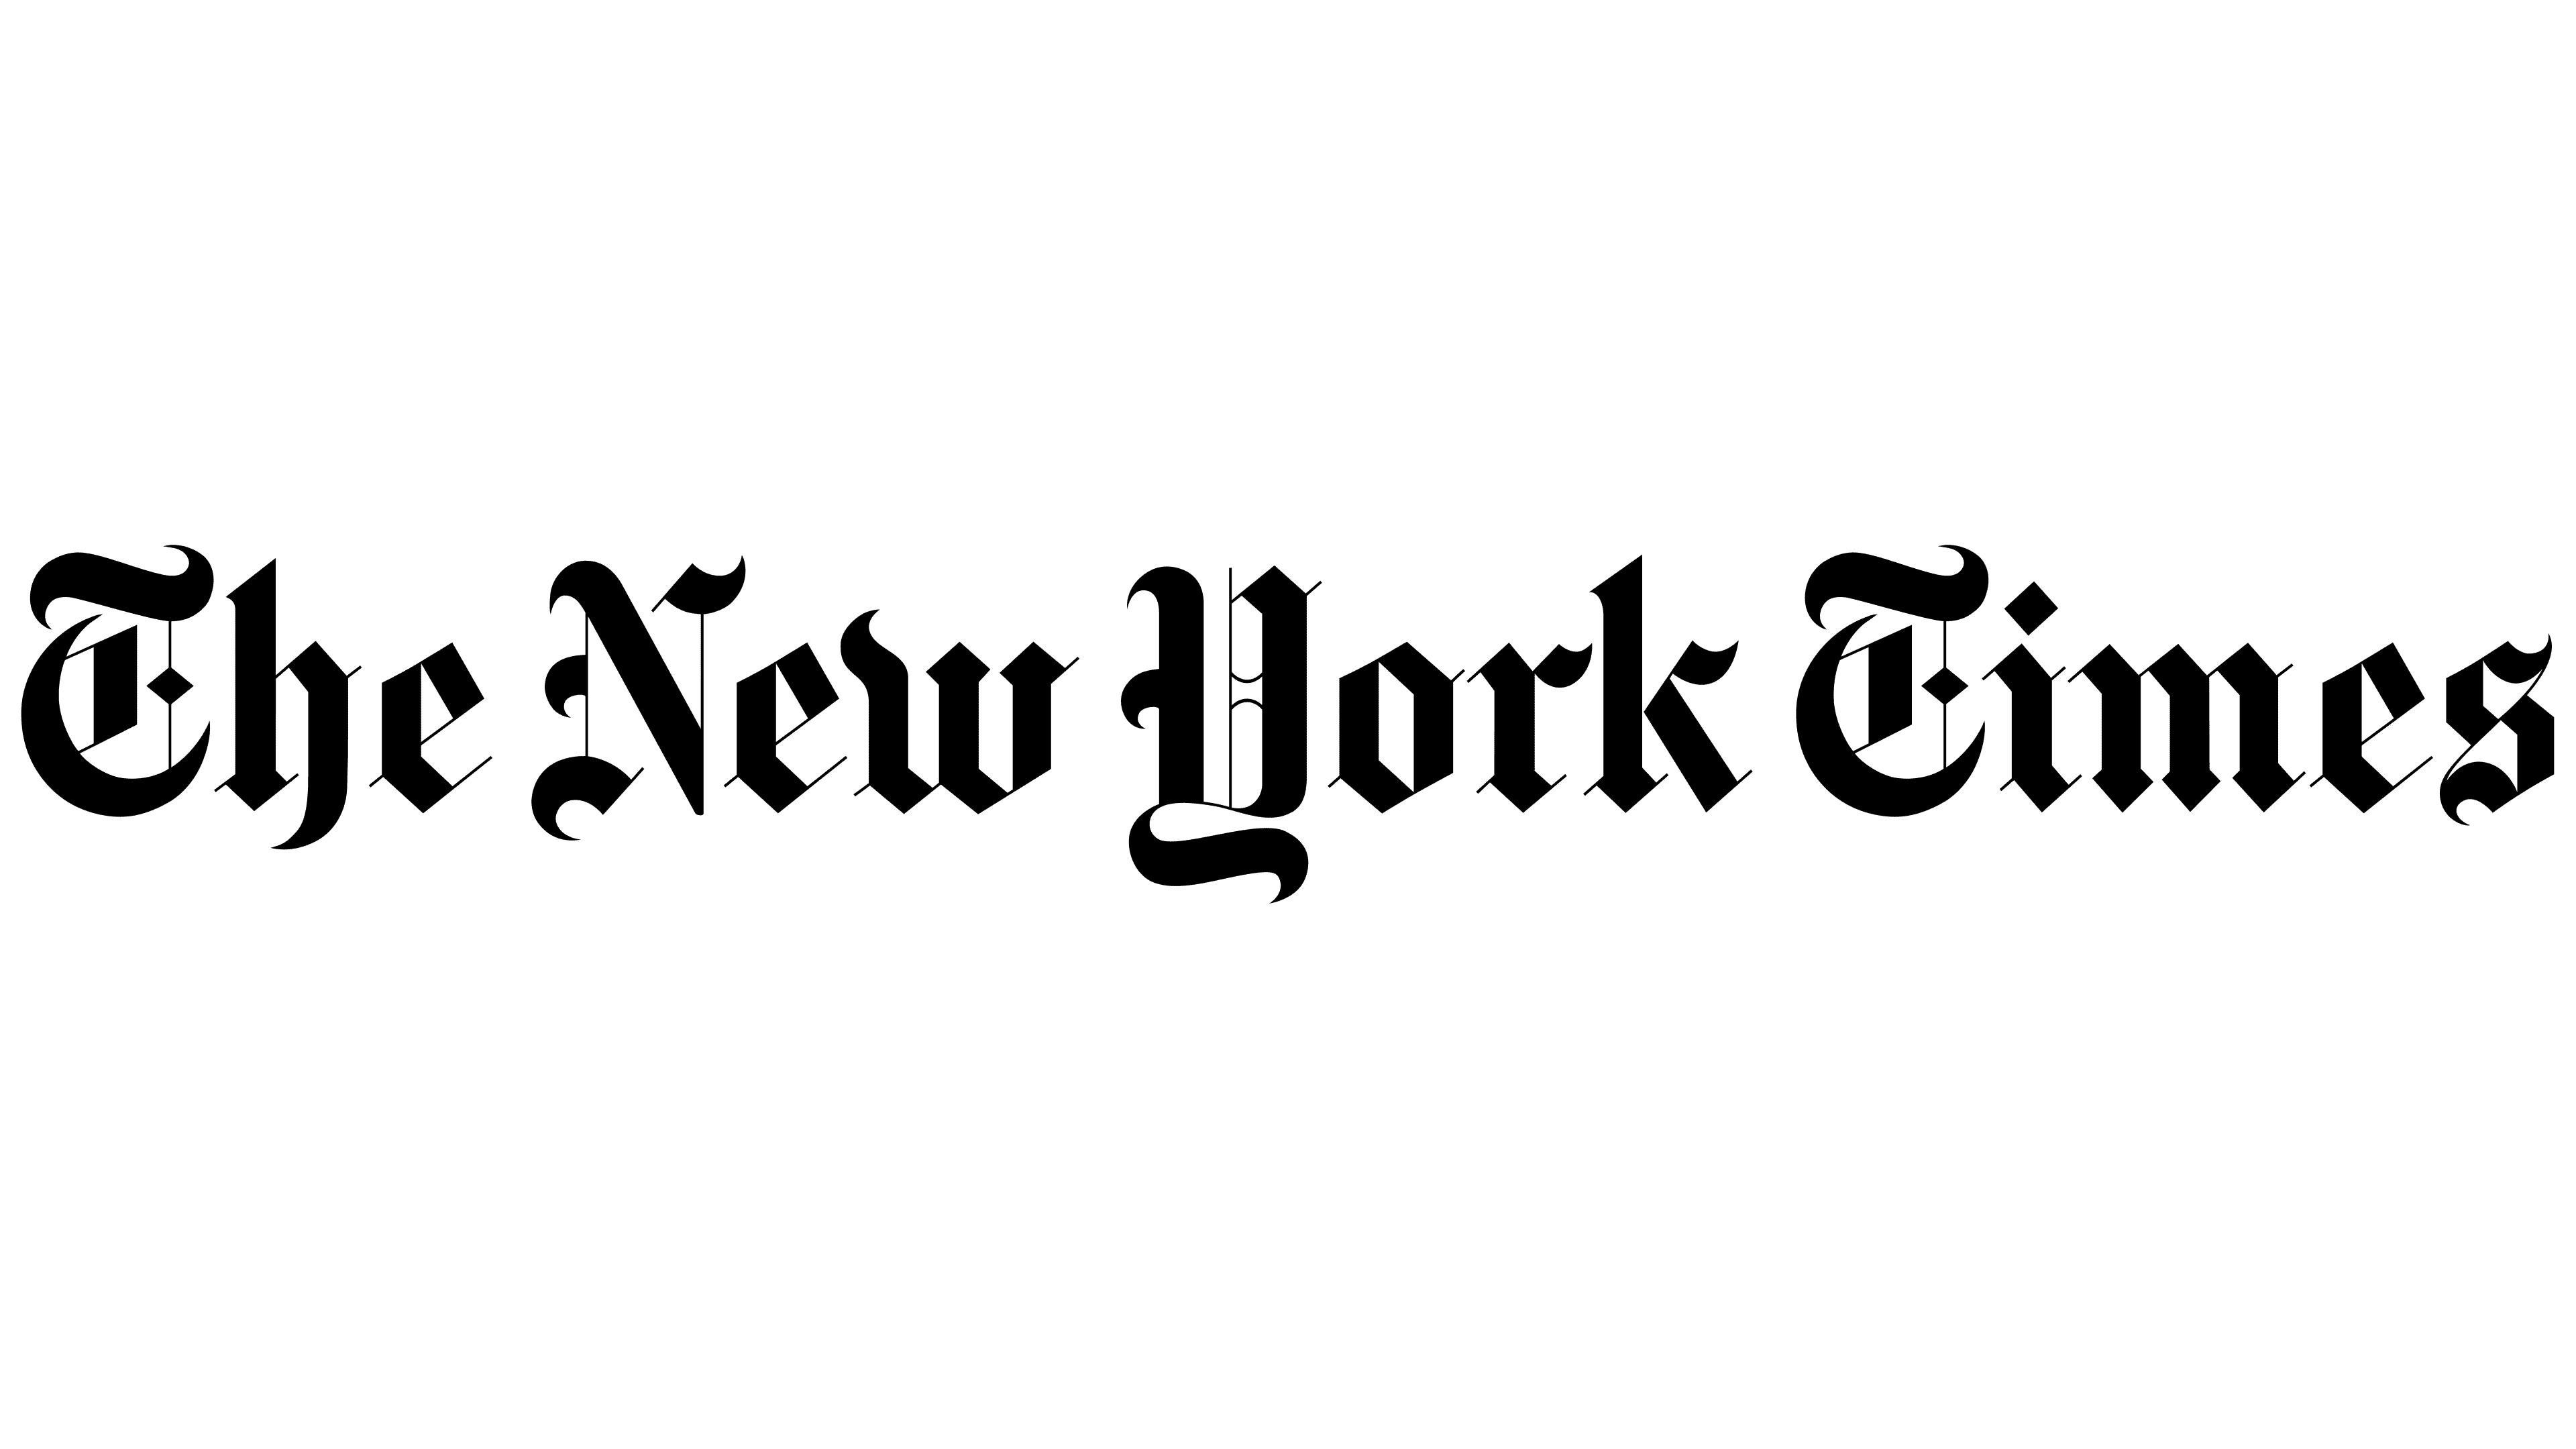 news agency the new york times logo